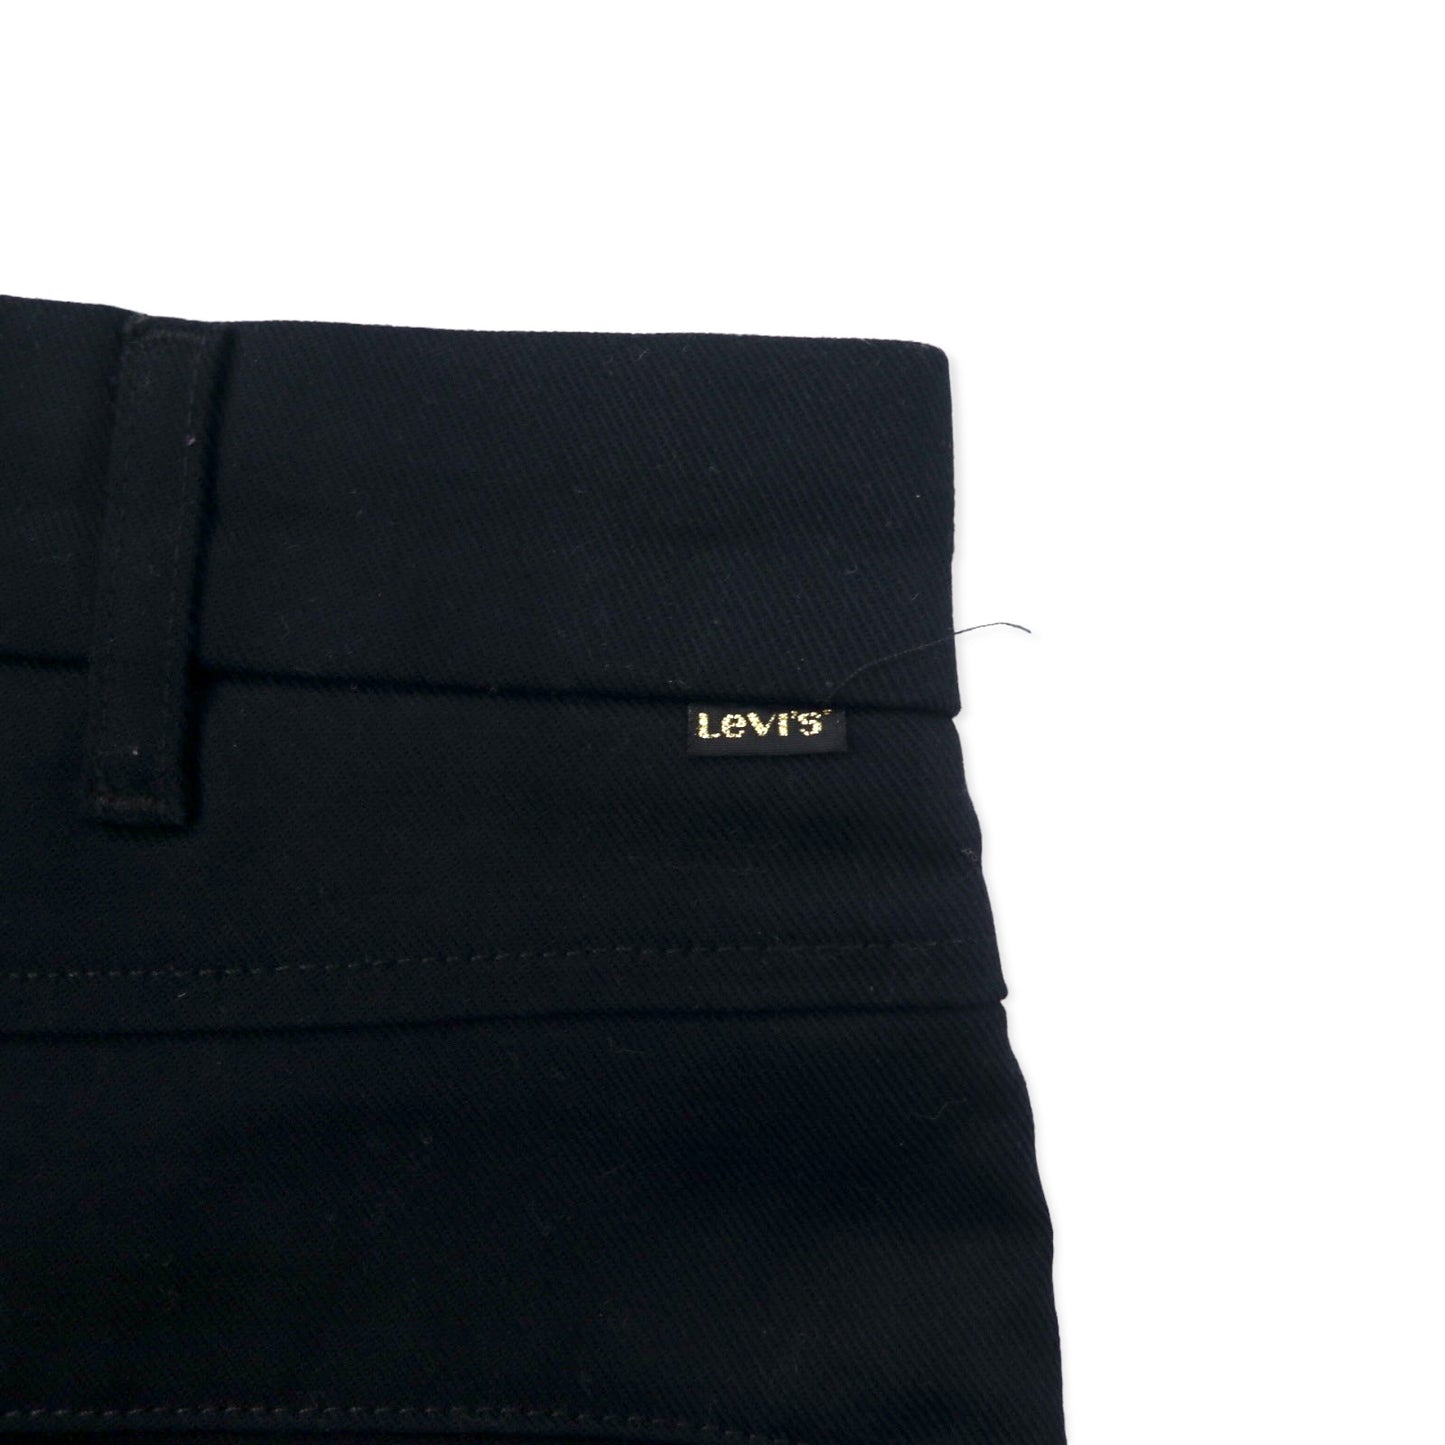 LEVI'S スタプレ クロップド ワイド レッグ チノ トラウザー パンツ 31 ブラック STA-PREST CROPPED WIDE LEG CHINO 47873-0003